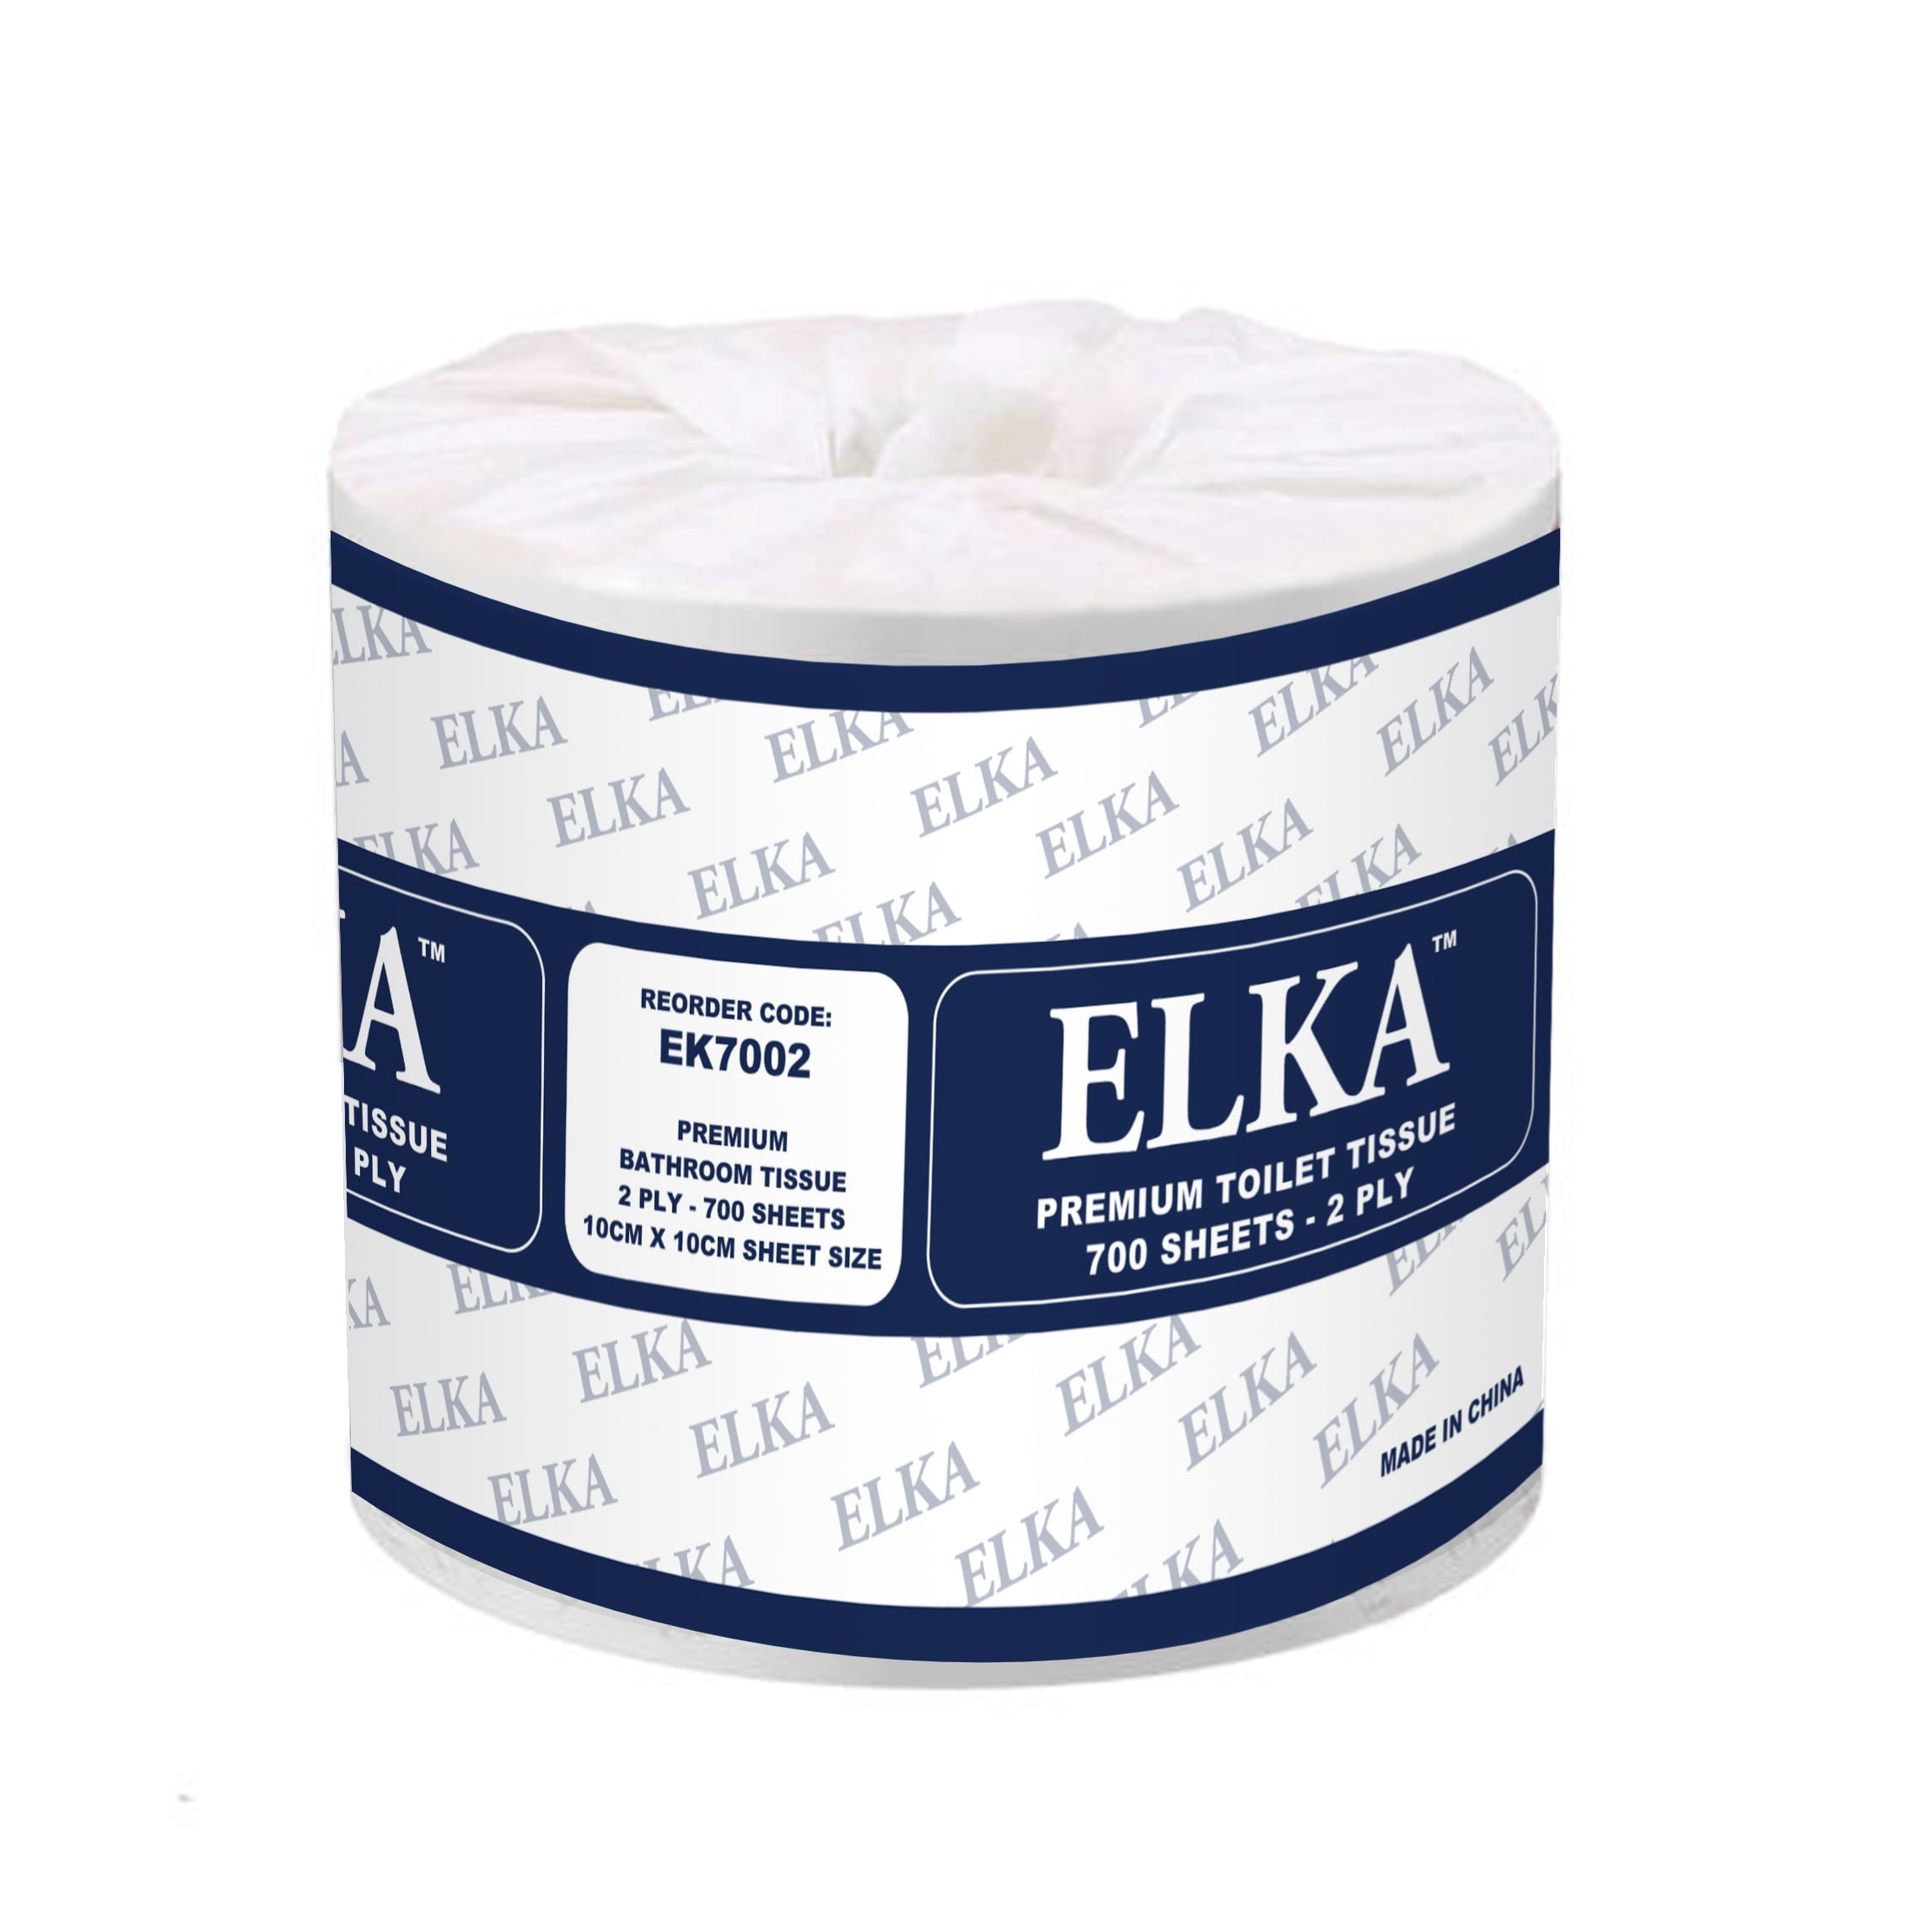 Elka Toilet Paper 2 Ply 700 Sheet Premium – Australian Made